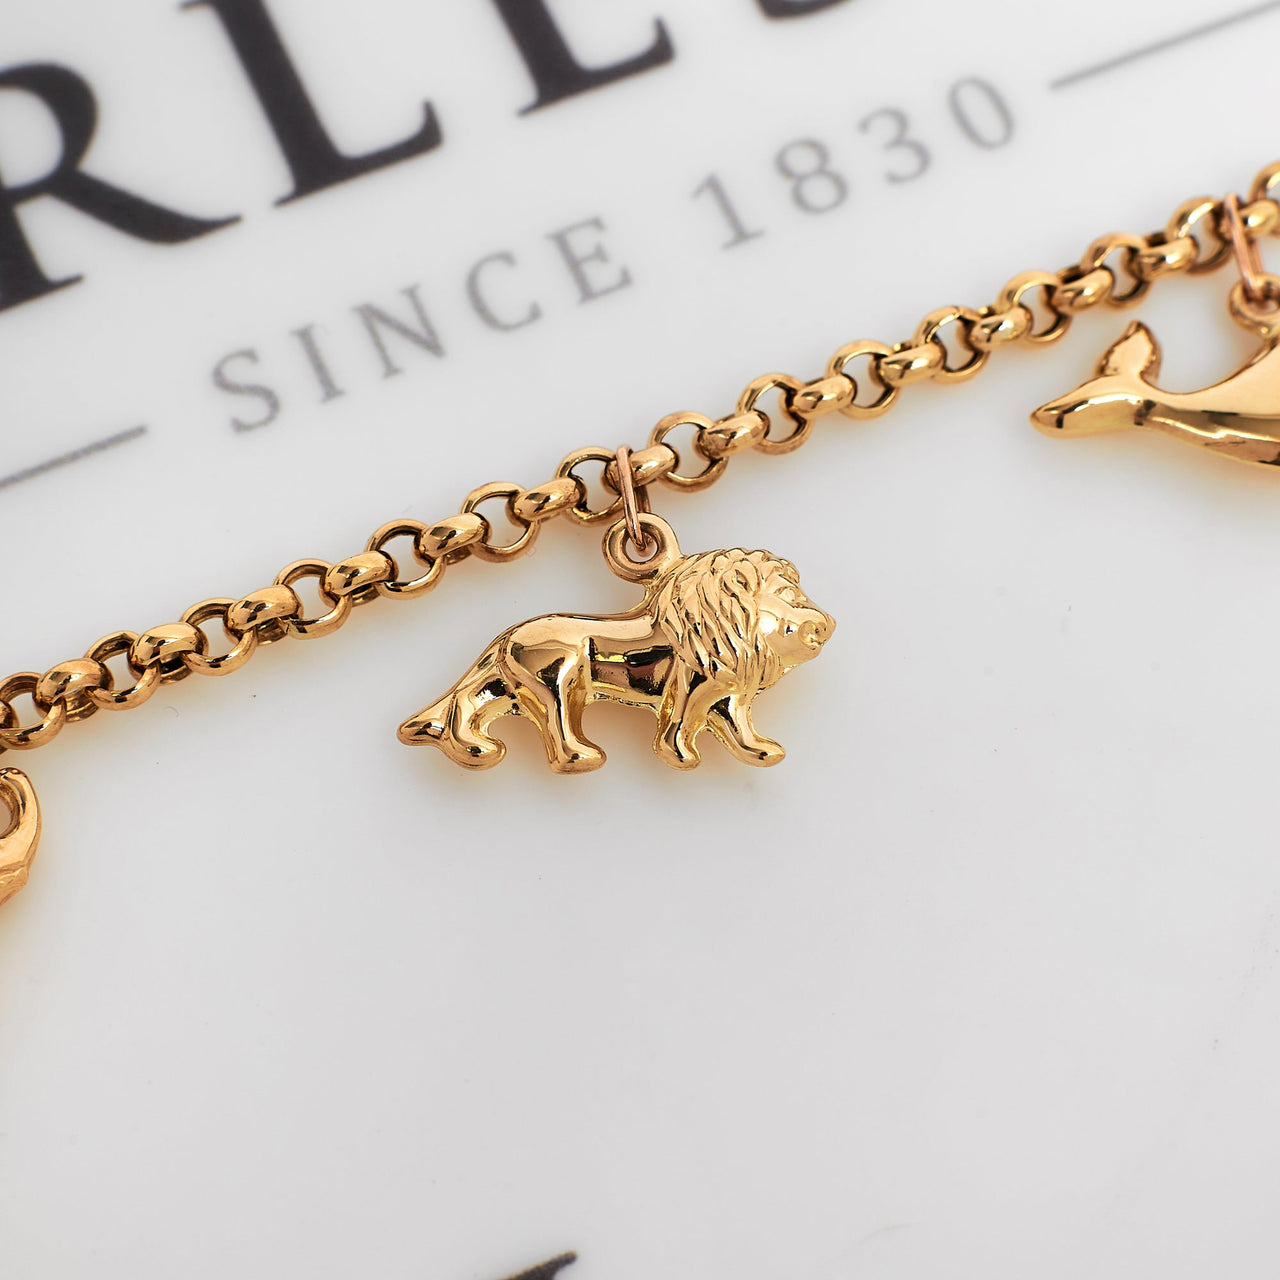 Pre-Owned 9ct Gold Belcher Chain Animal Charm Bracelet